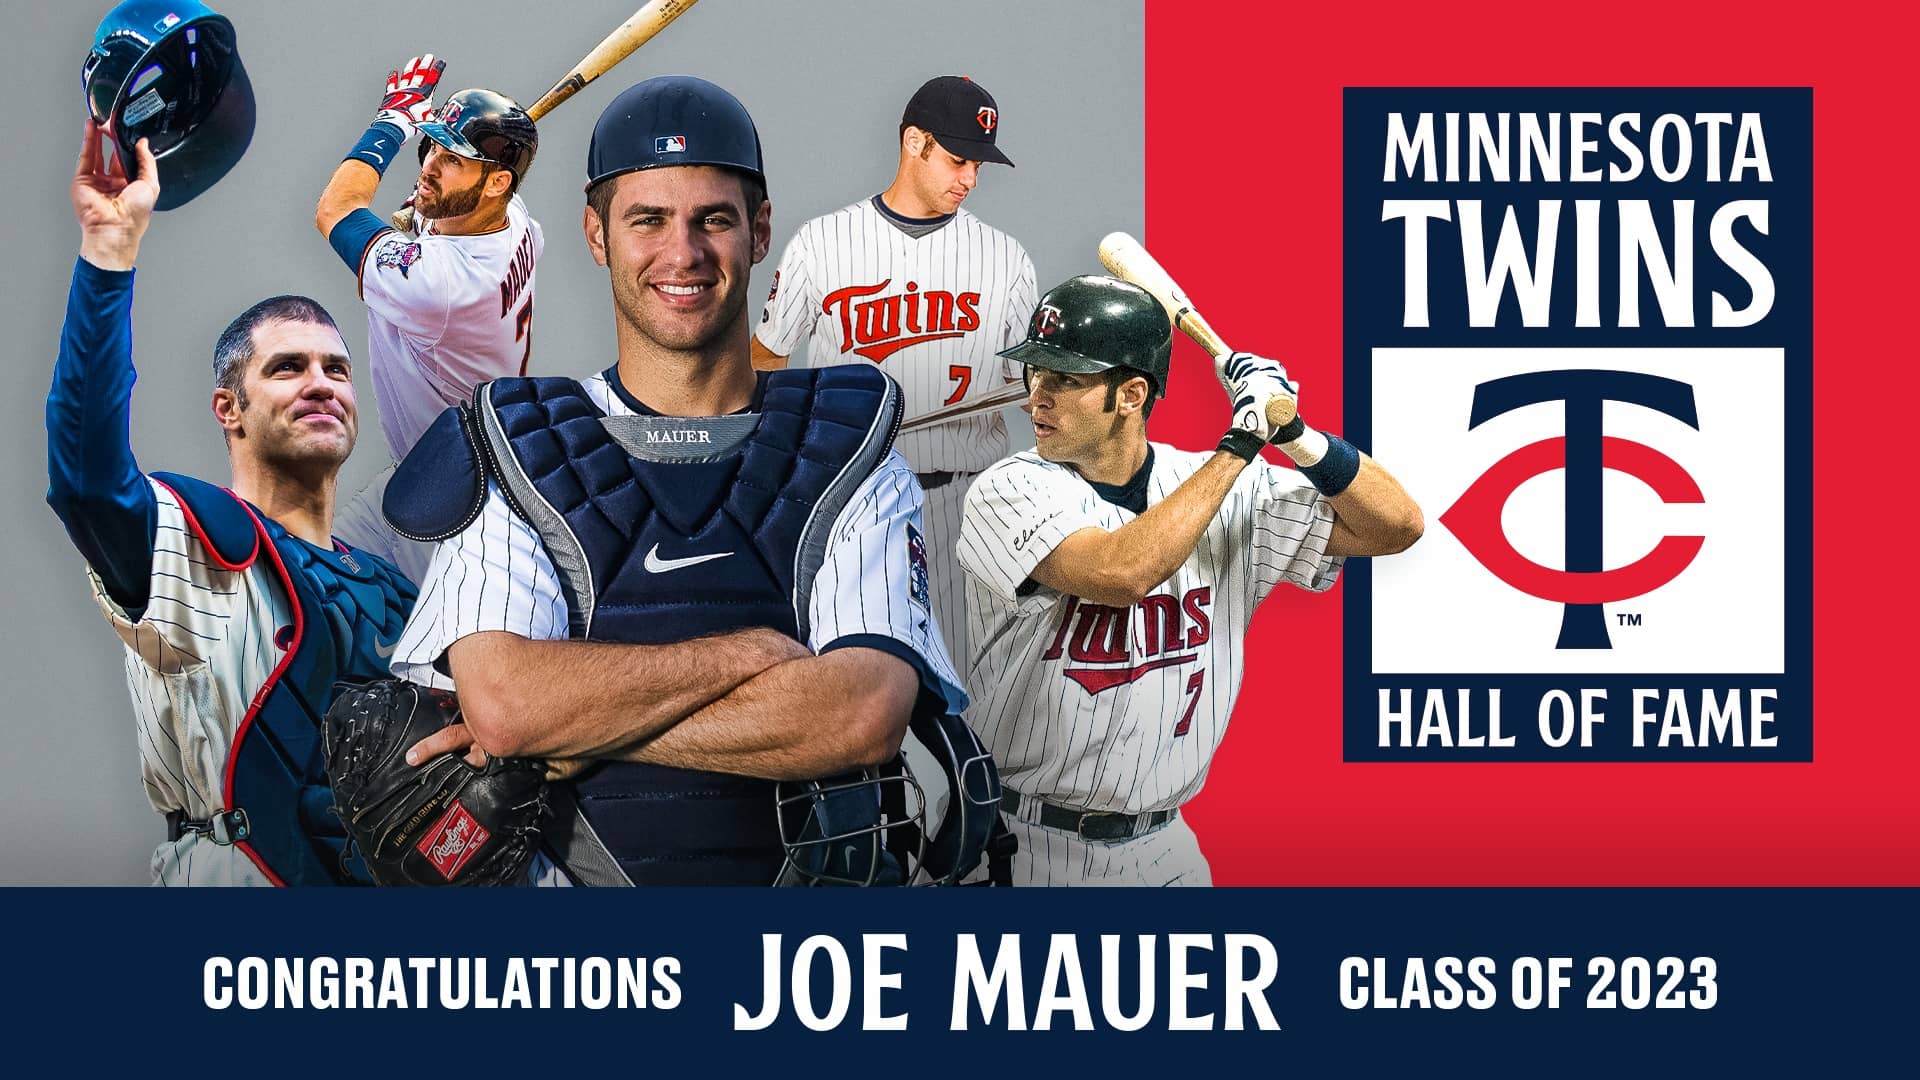 Joe Mauer To Become The 38th Member Of The Minnesota Twins Hall Of Fame